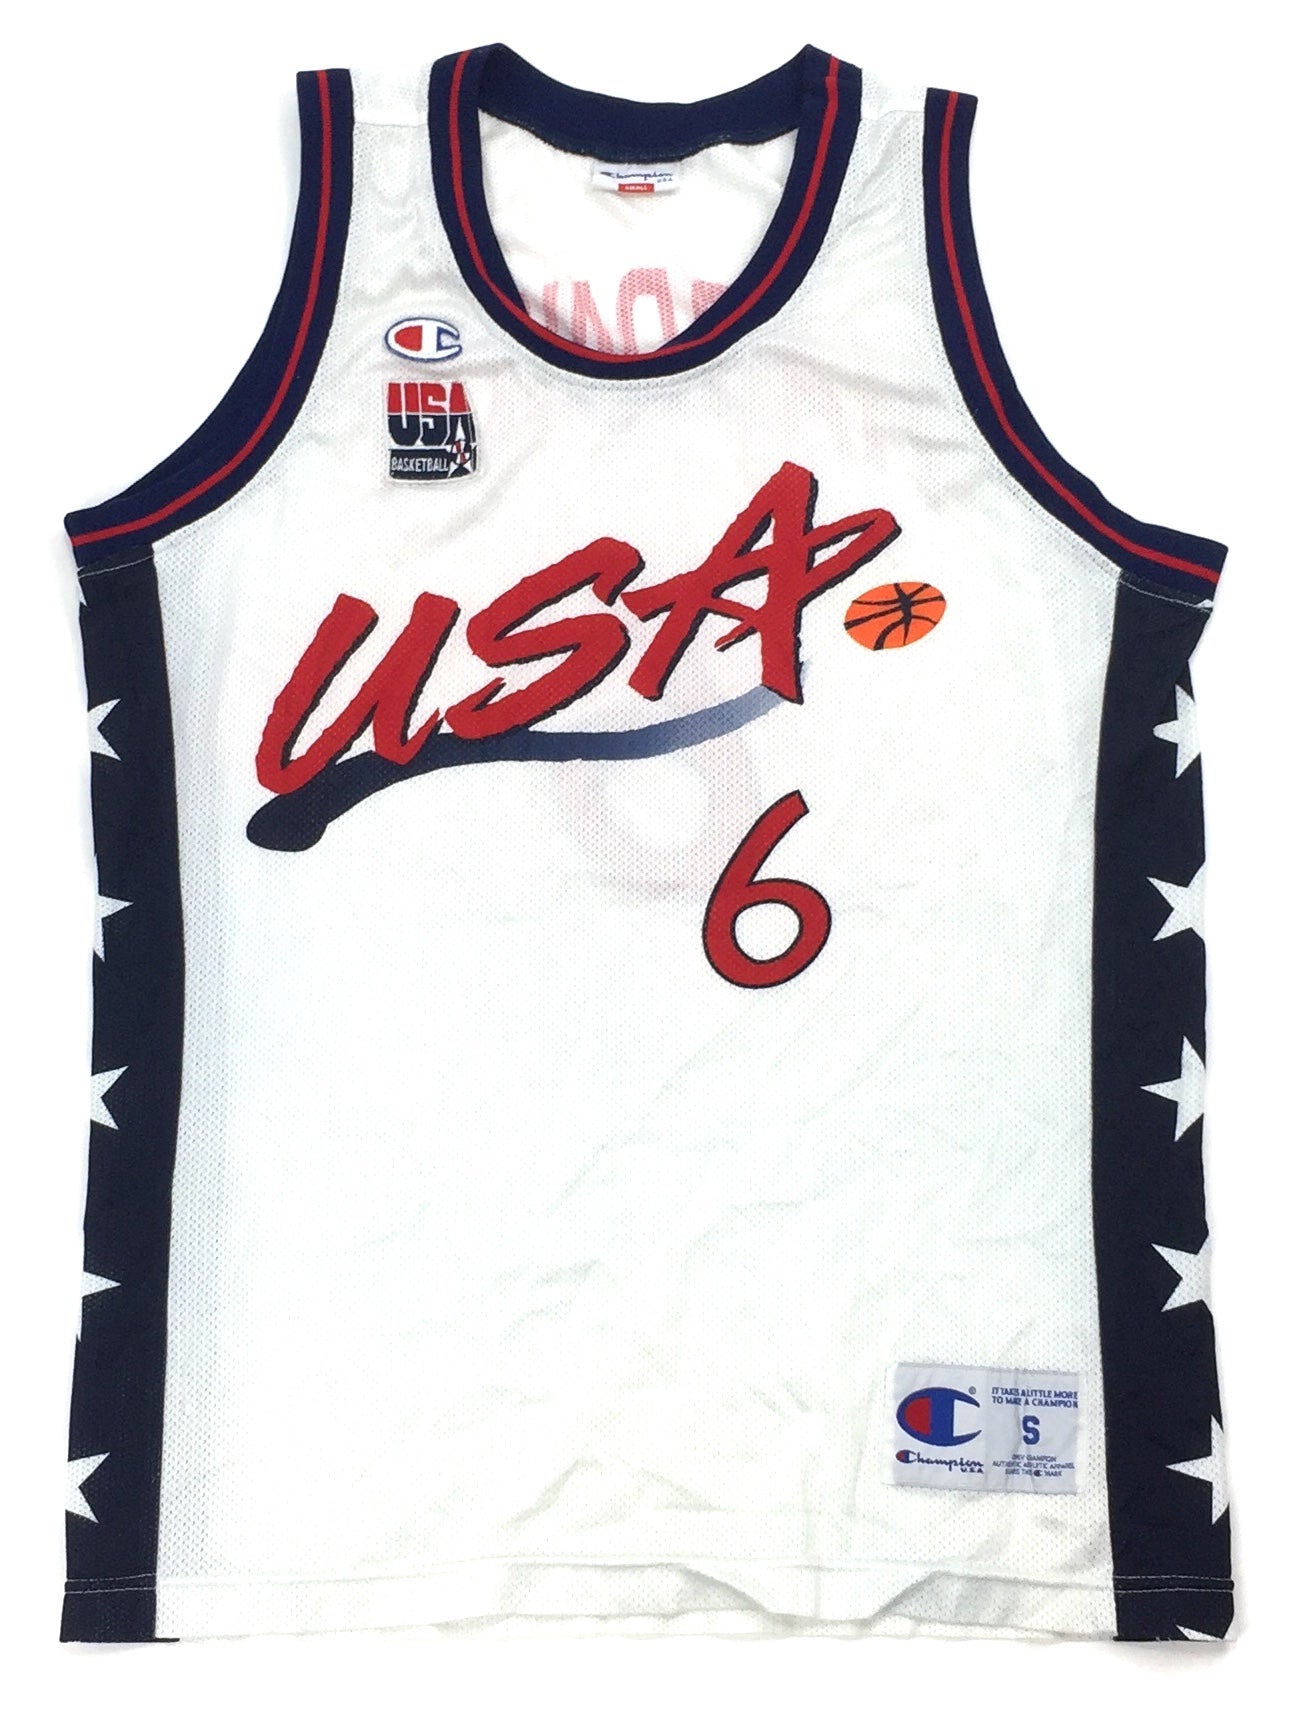 0439 Champion Vintage Hardaway USA Team Jersey